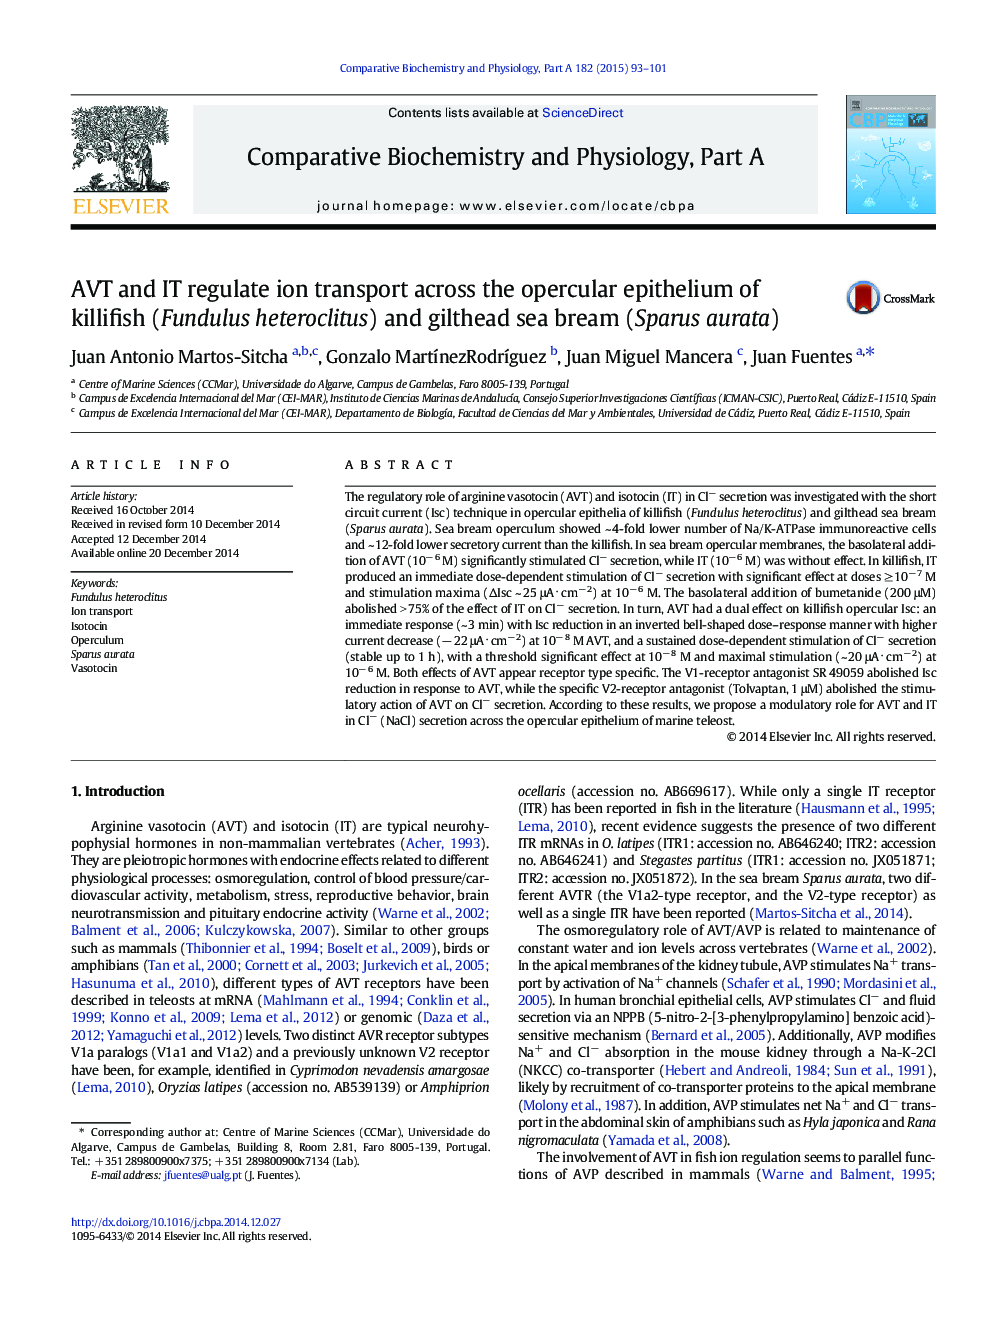 AVT and IT regulate ion transport across the opercular epithelium of killifish (Fundulus heteroclitus) and gilthead sea bream (Sparus aurata)